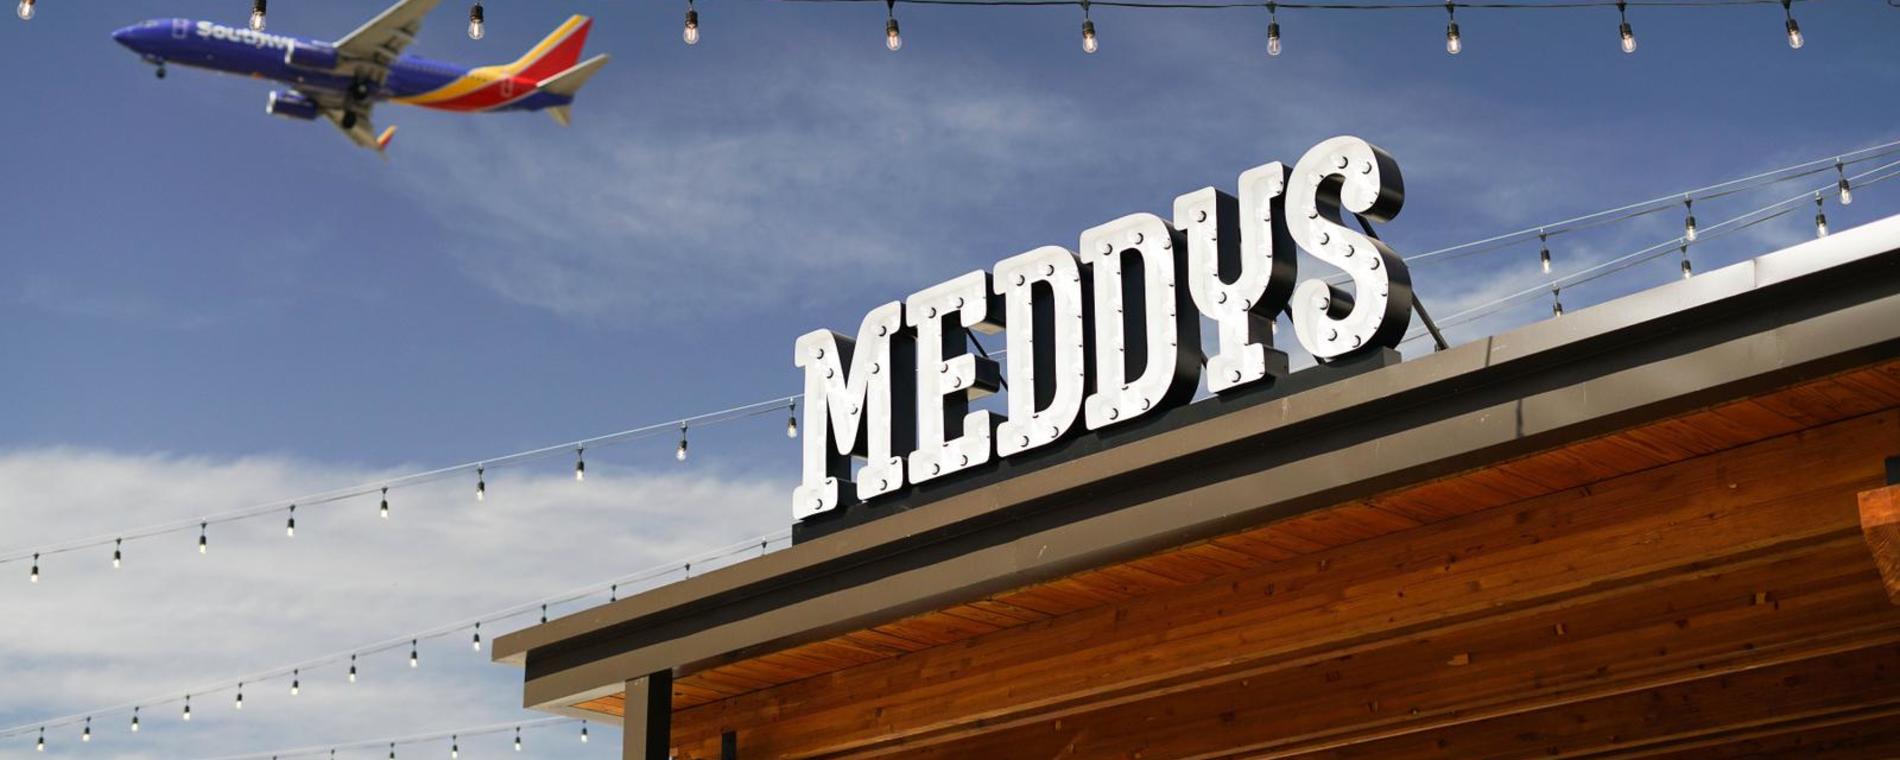 Meddy's West Exterior